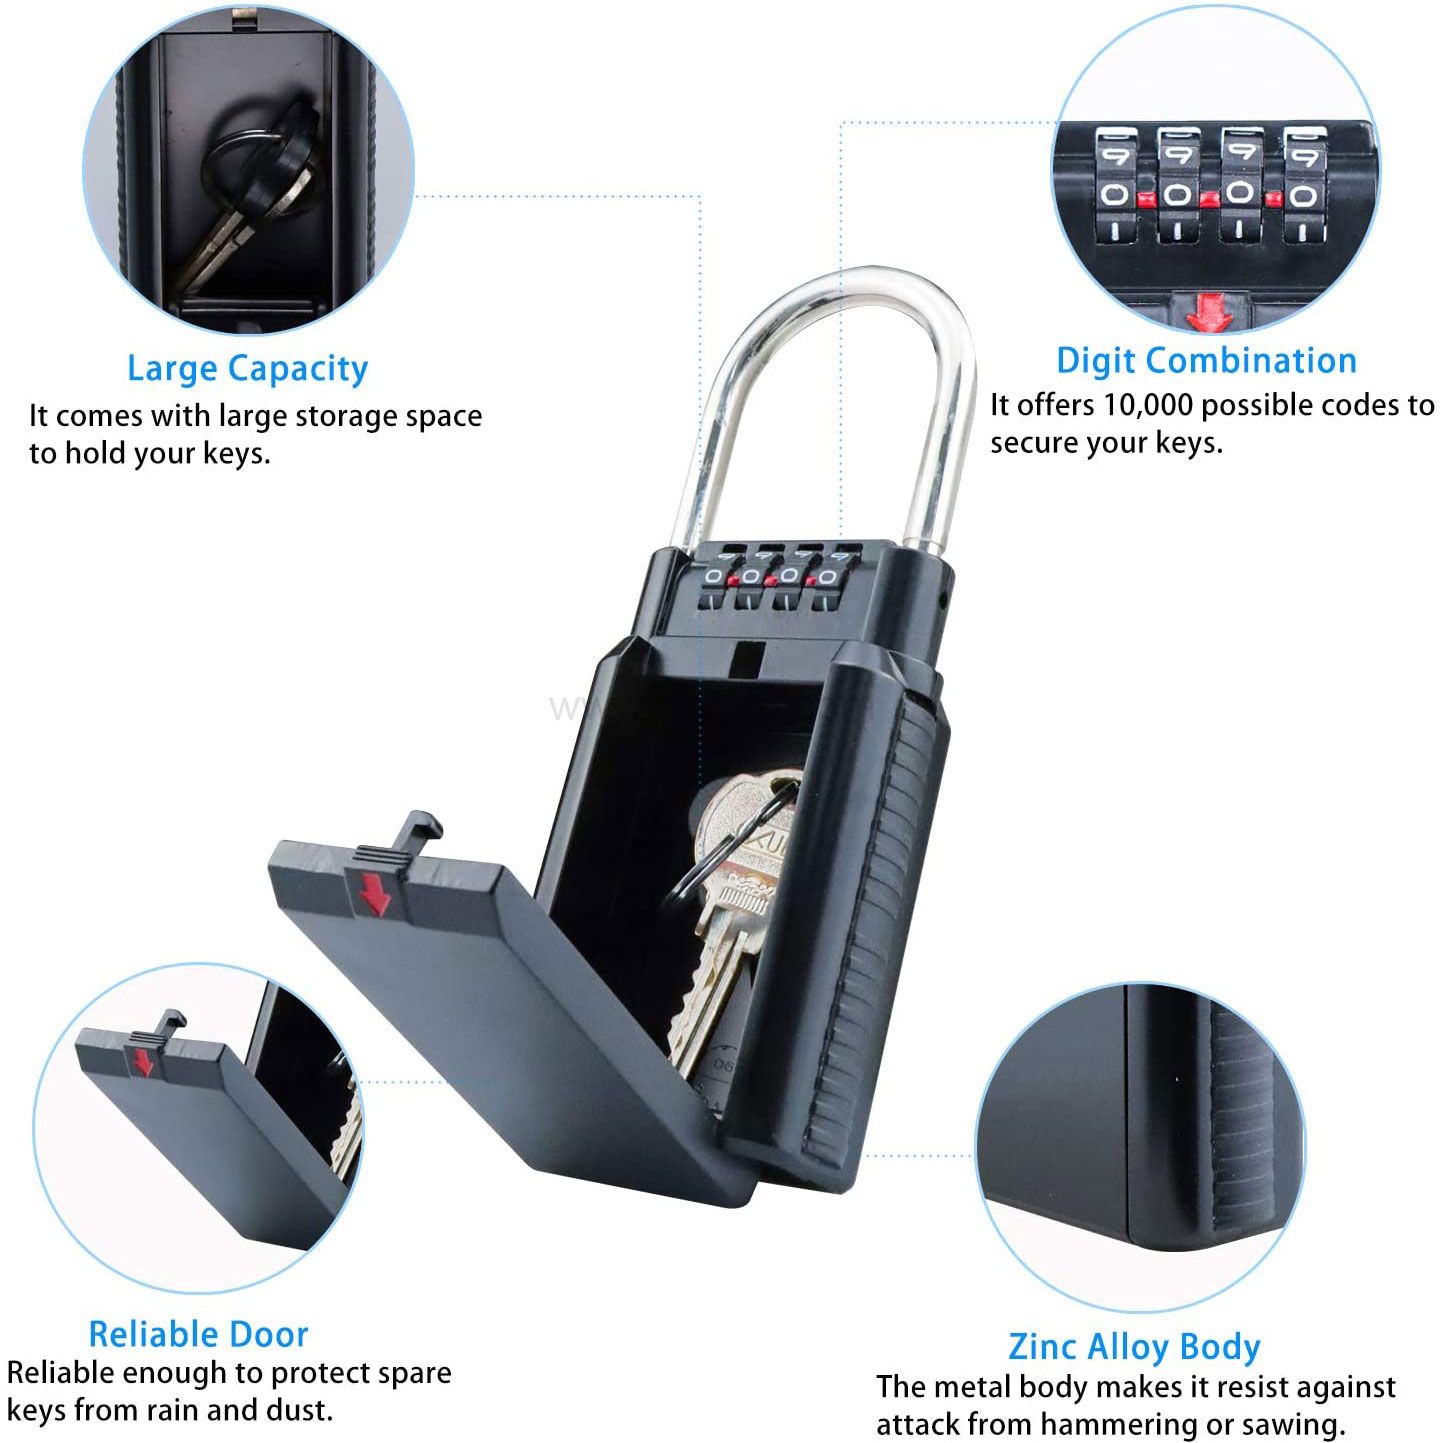 Portable anti theft metal hook key box with waterproof rain cover 4-digit code lock